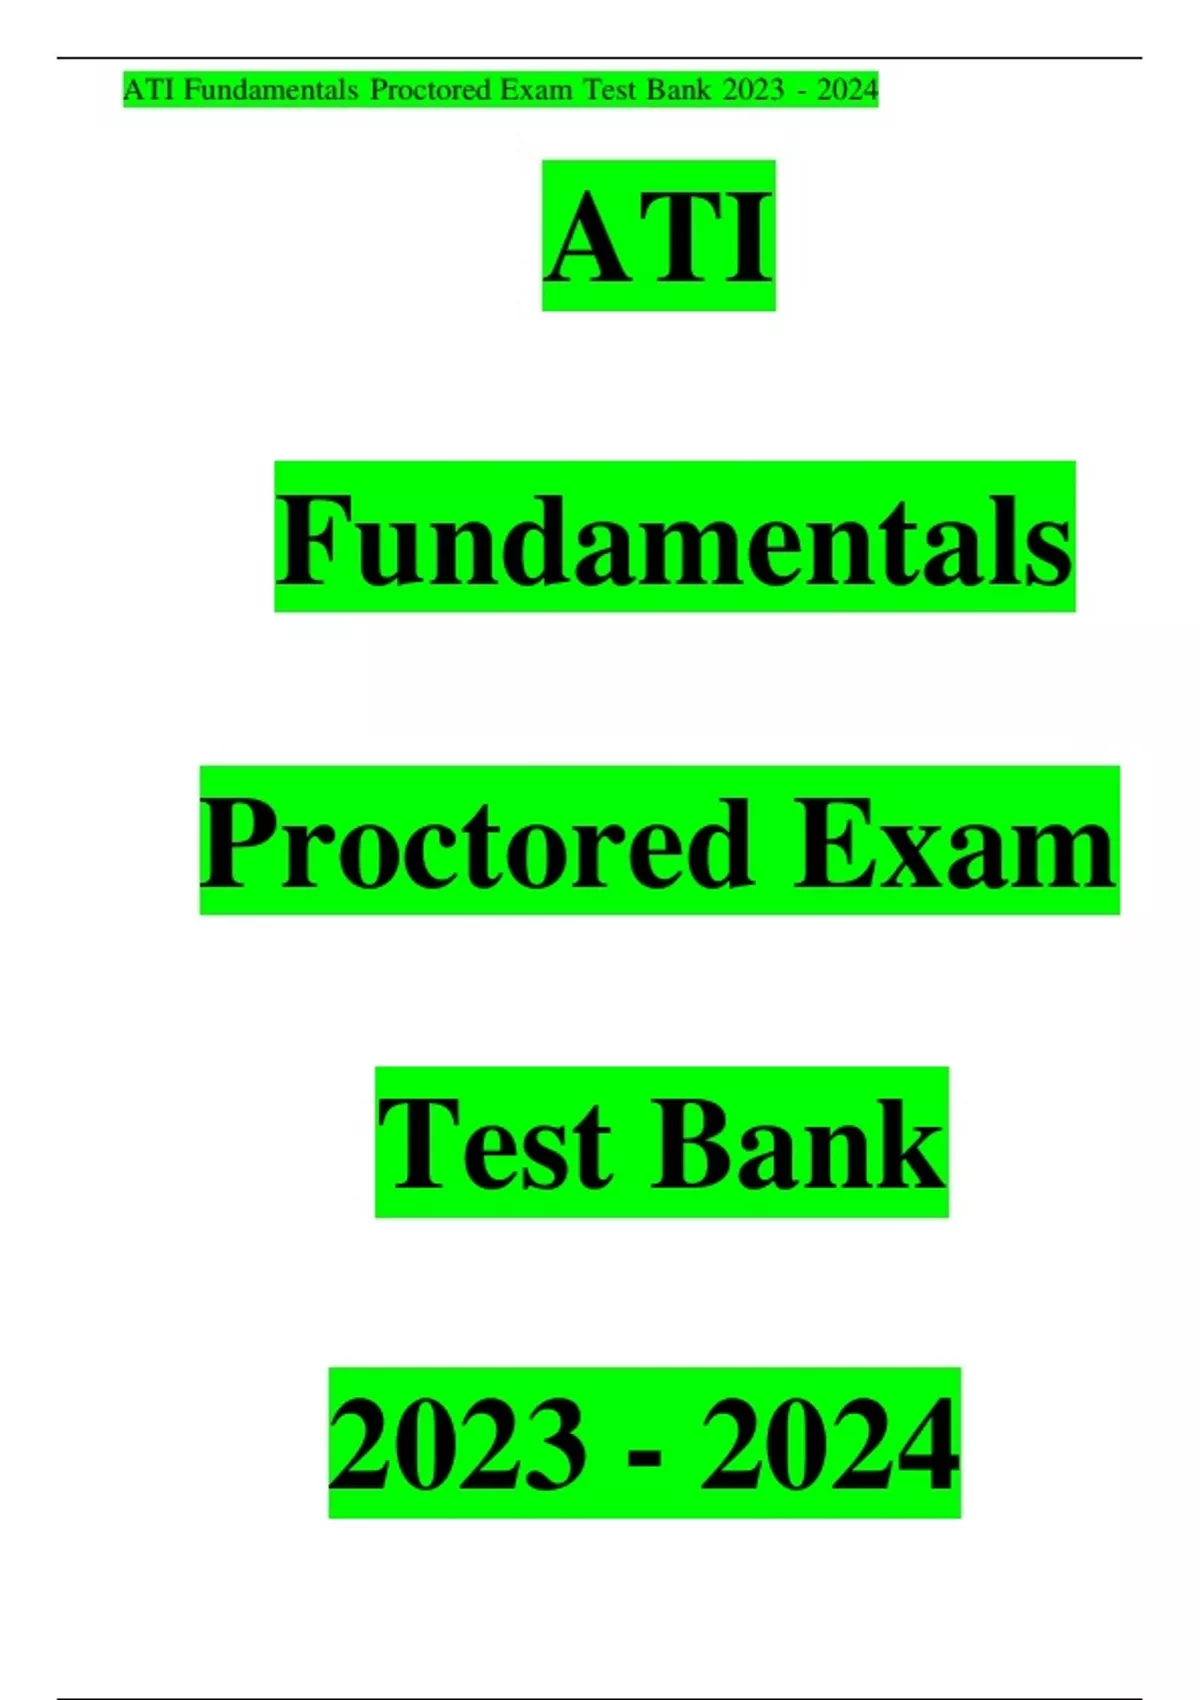 ATI Fundamentals Proctored Exam Test Bank latest 2023/2024 most